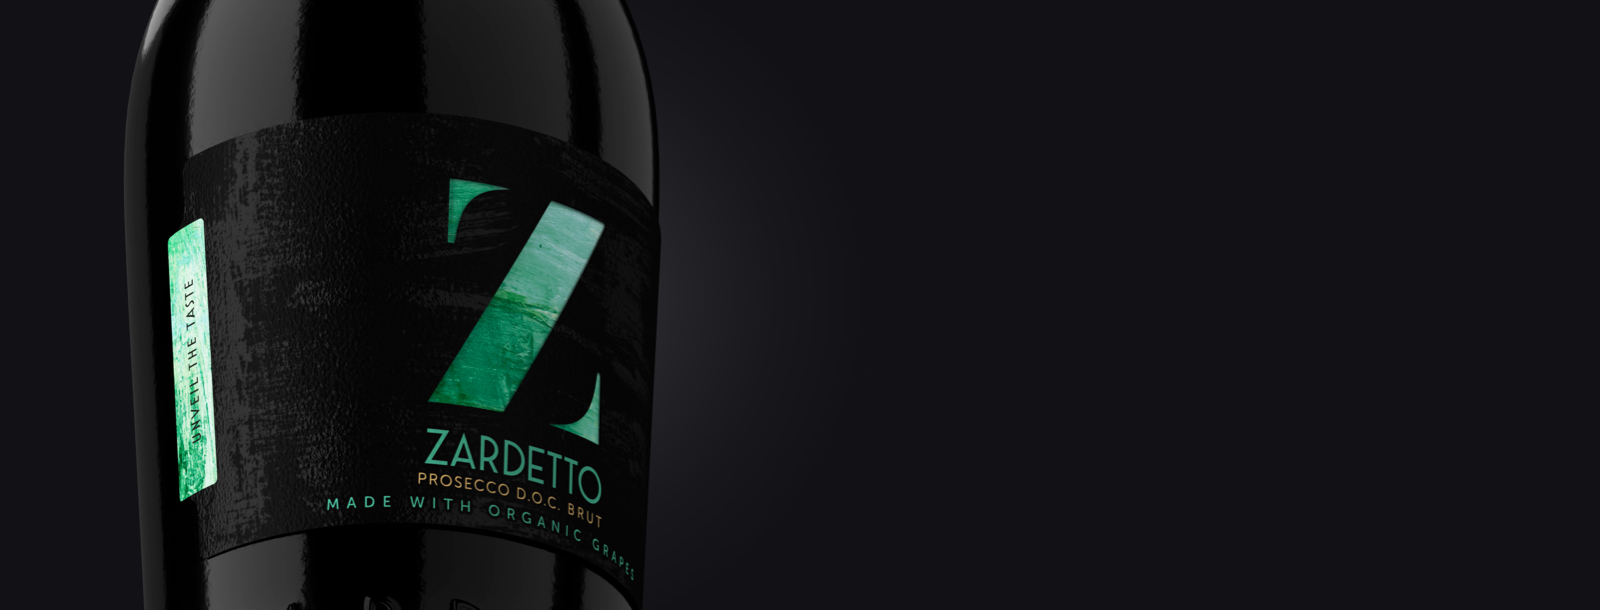 Closed Label on the bottle of Zardetto's Prosecco DOC brut Organic Grapes